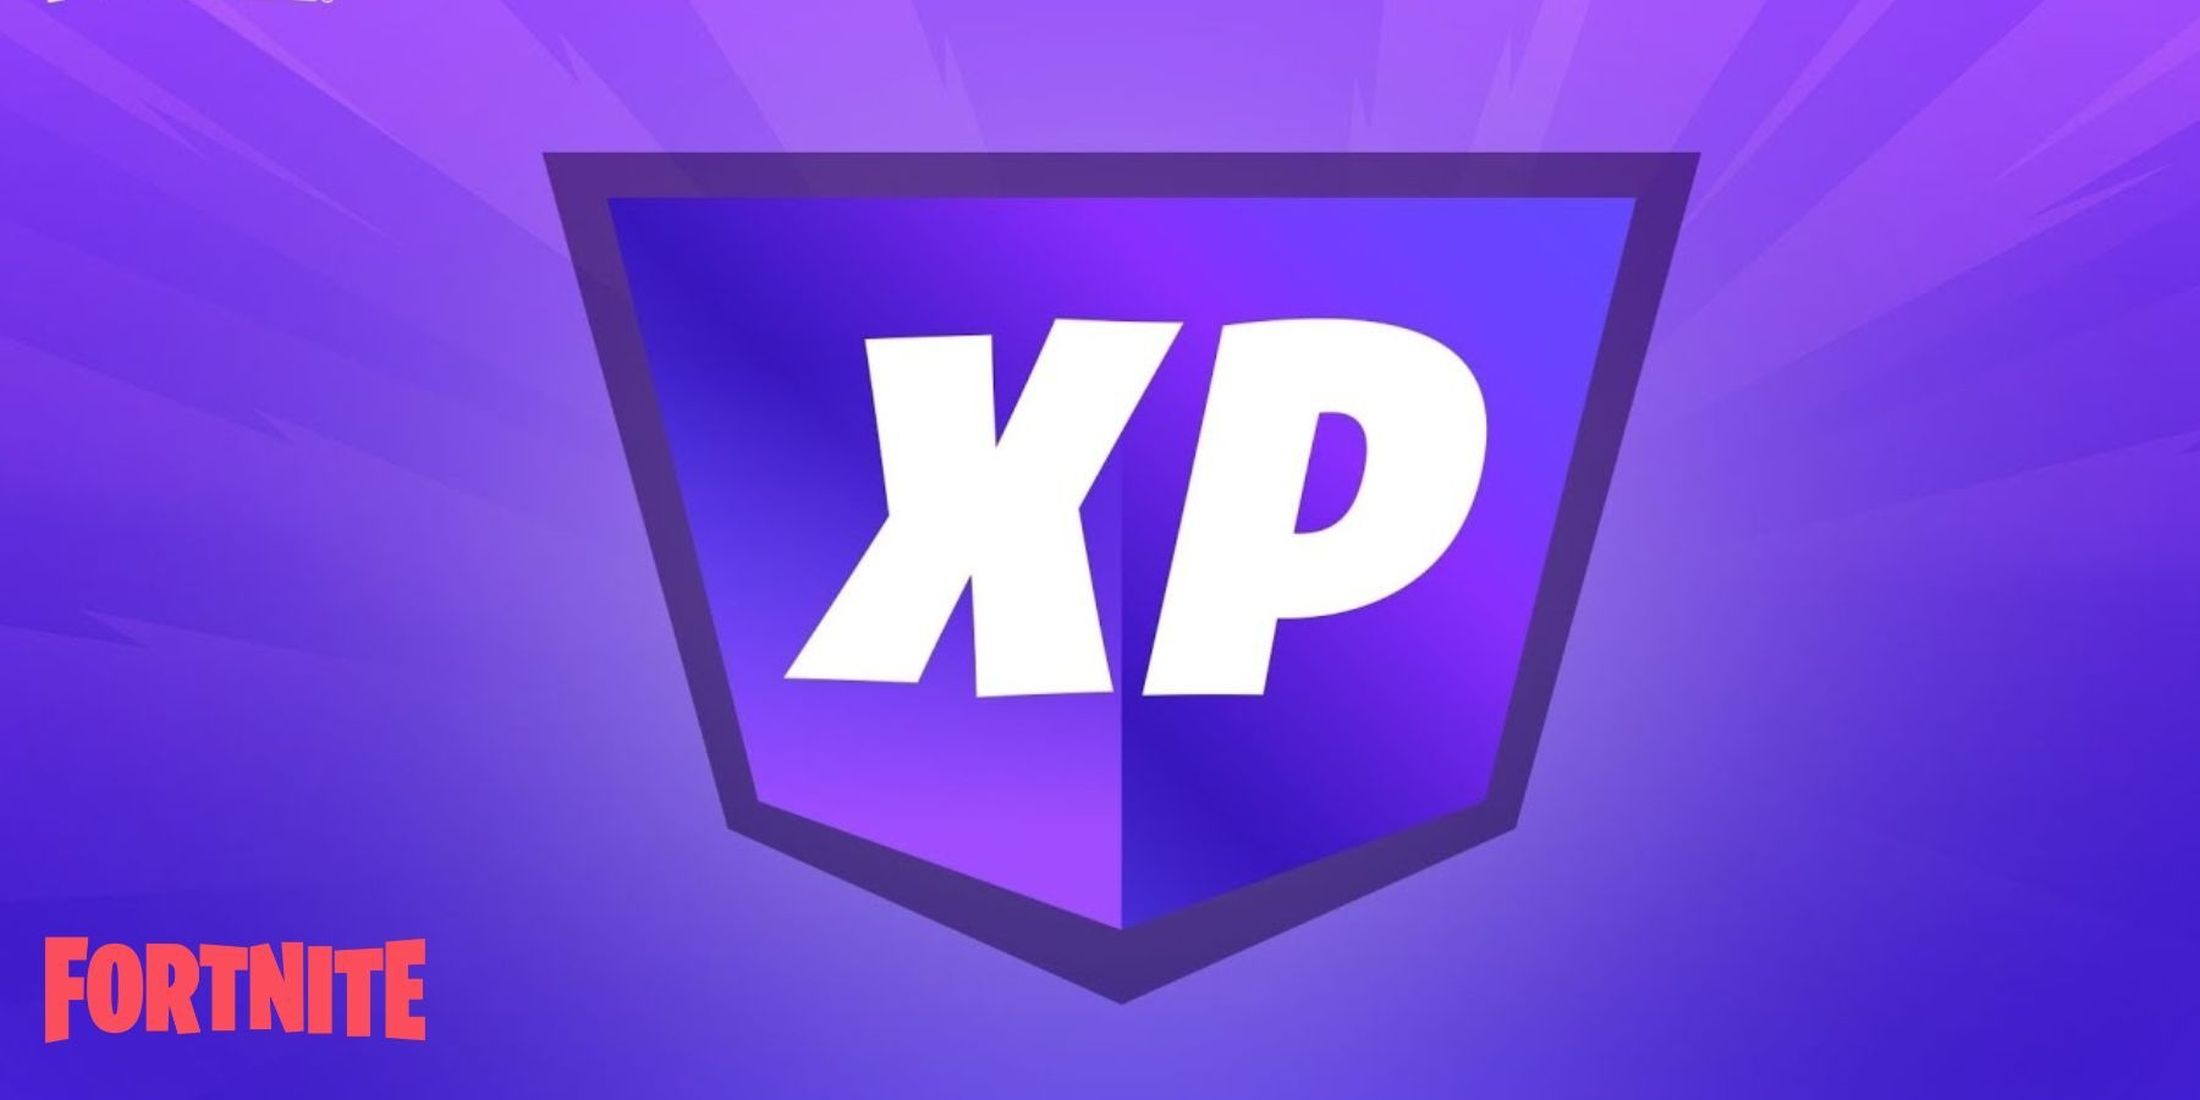 Fortnite XP Logo